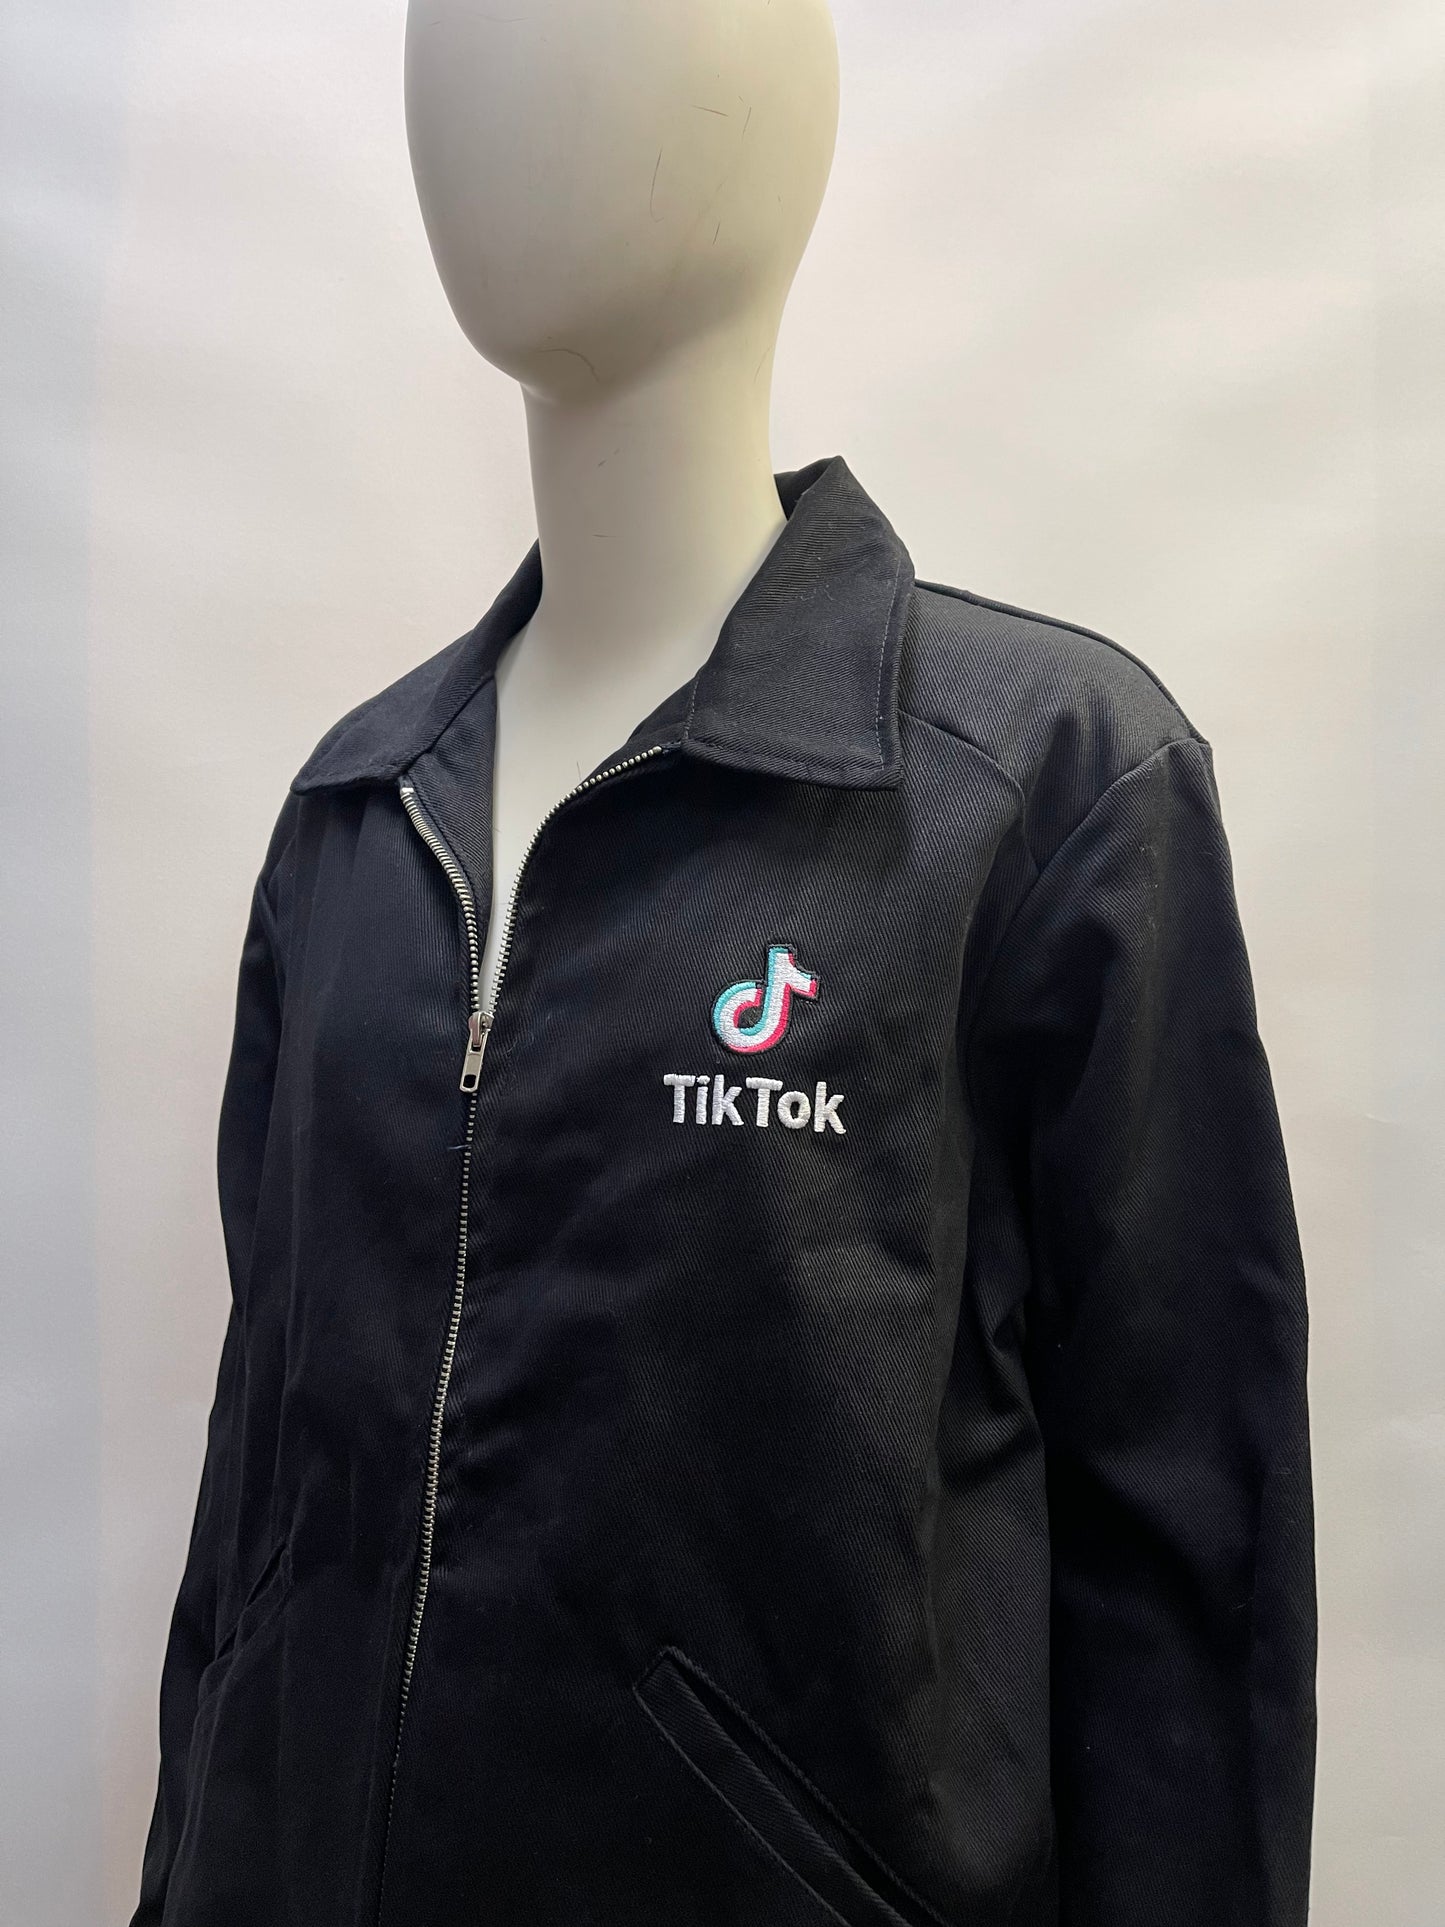 TikTok Official Employee Black Jacket (Size M)